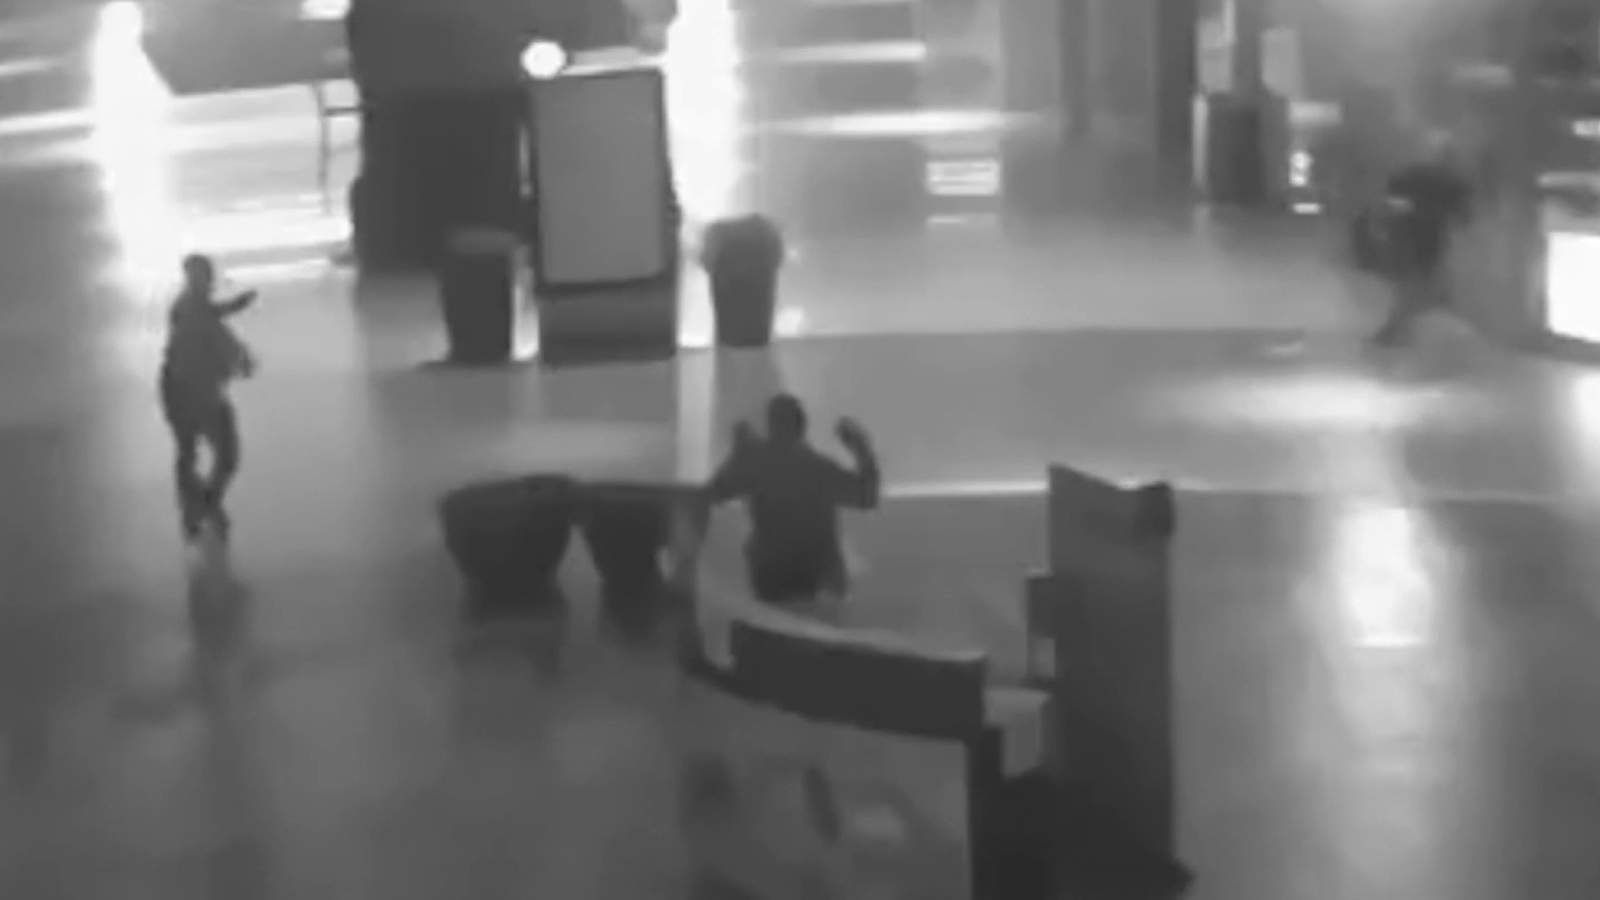 Video: Security guard held at gunpoint during Florida Mall burglary, deputies say